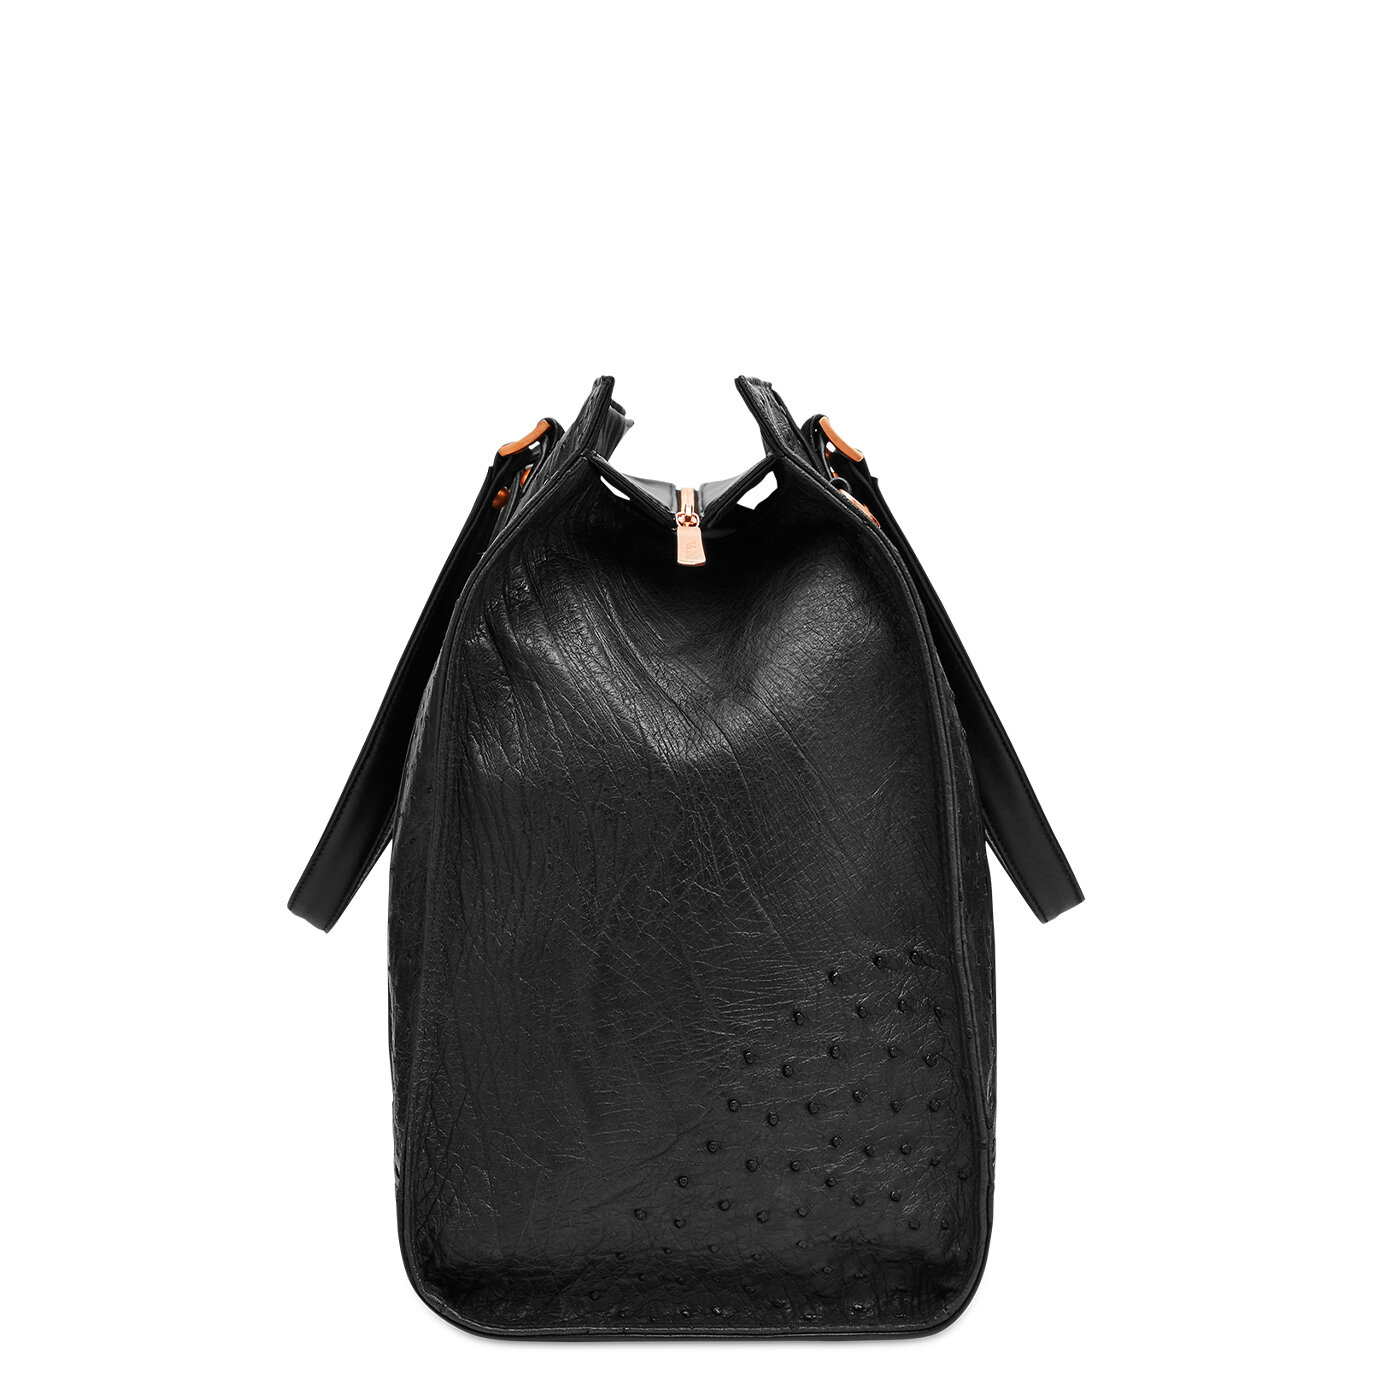 Australian Made Leather Travel Bags - Style Guru: Fashion, Glitz, Glamour, Style unplugged